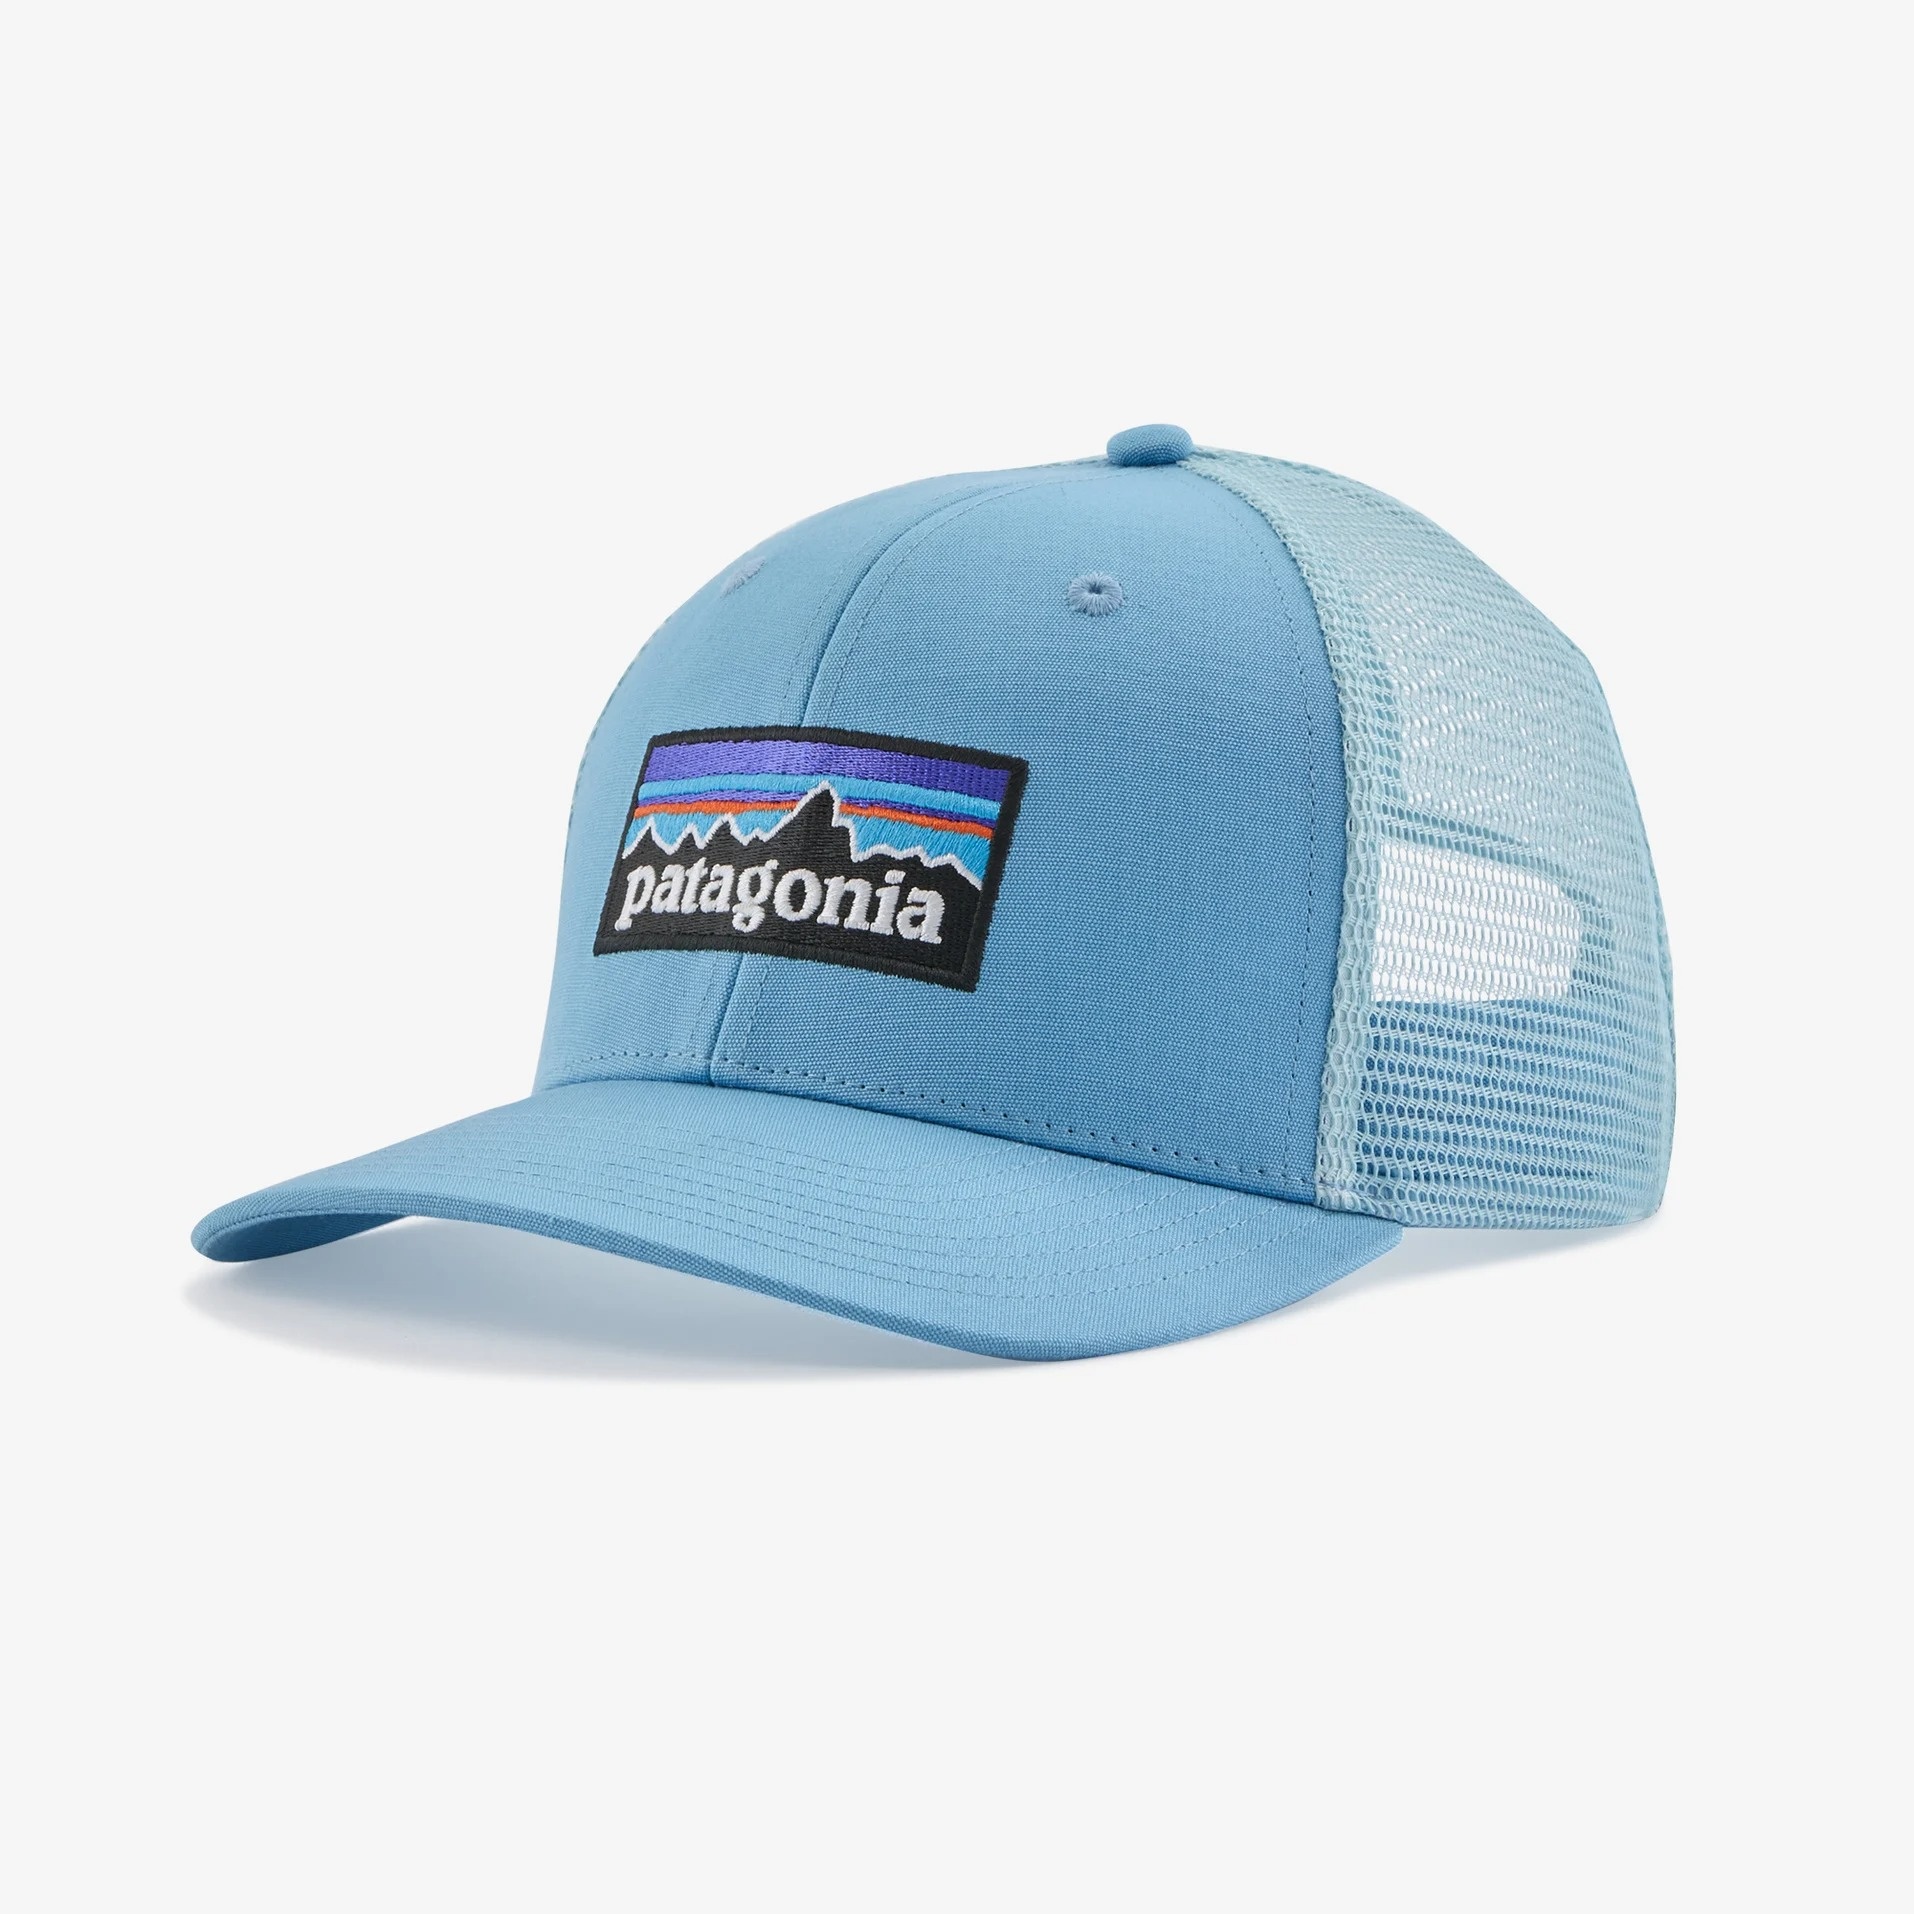  Patagonia Hats For Men